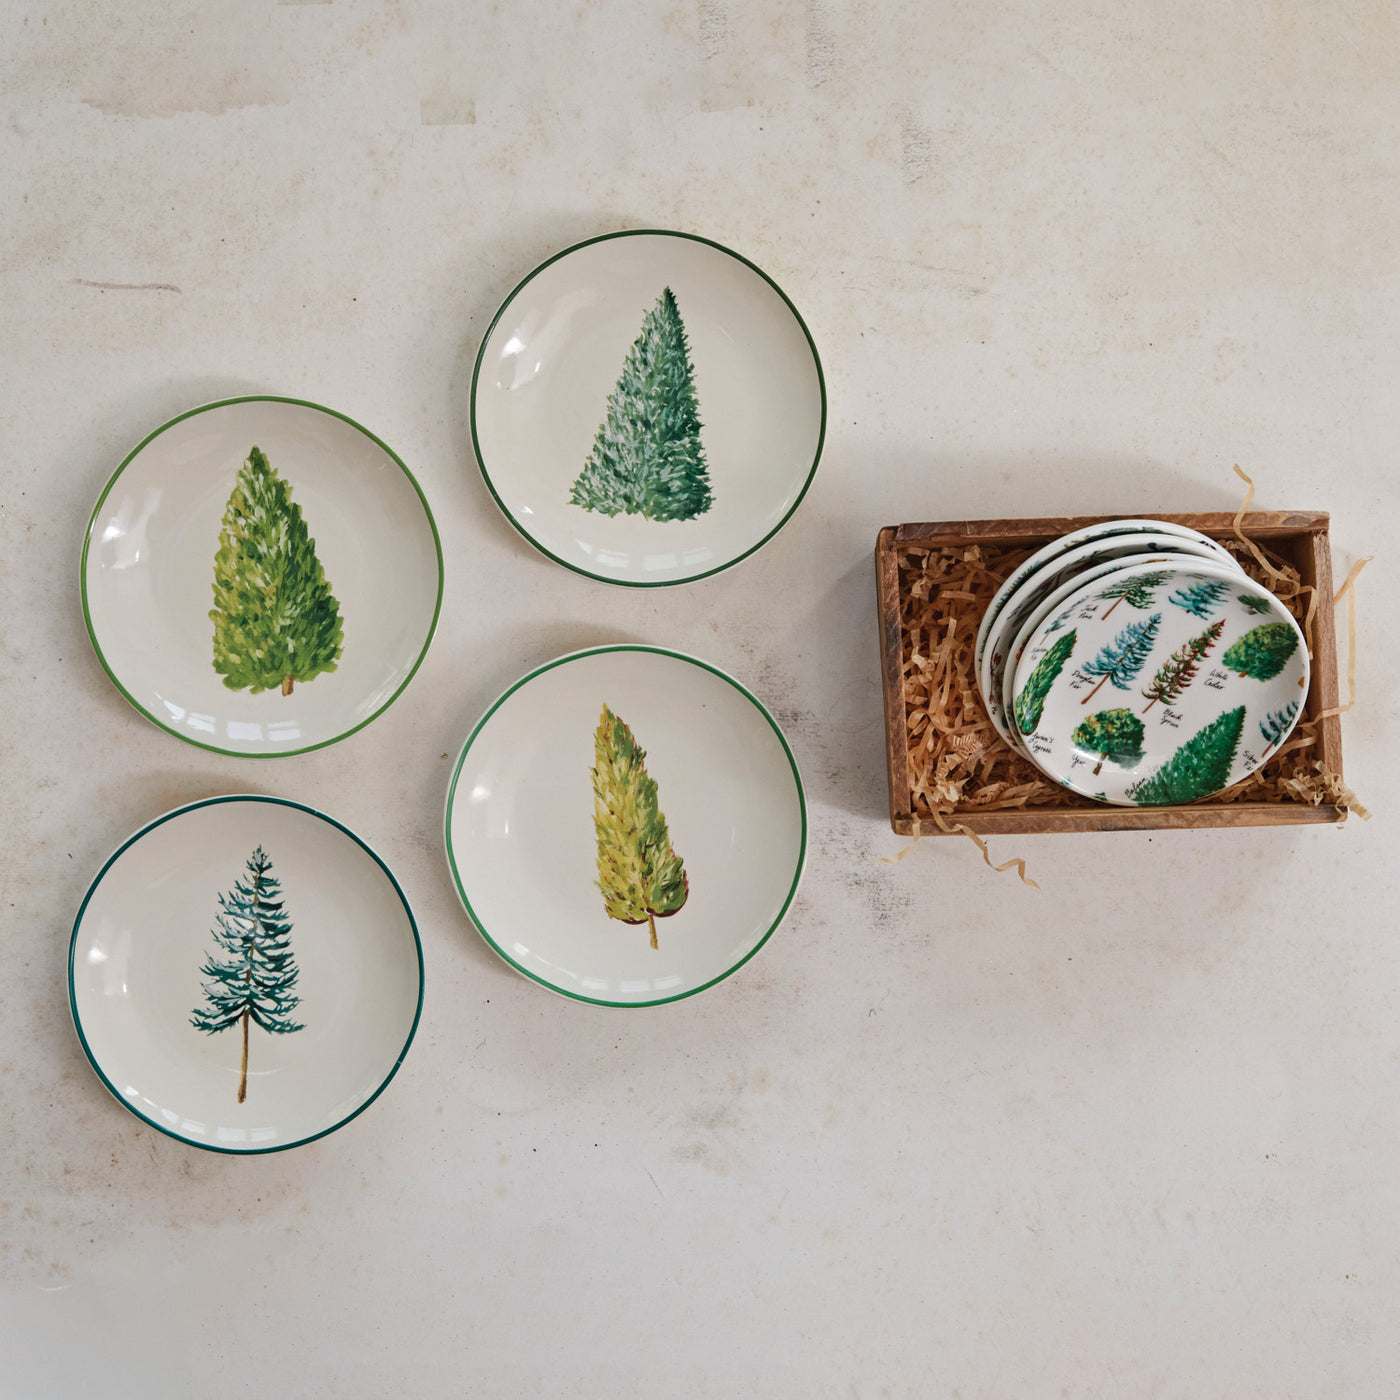 5" Round Hand-Painted Stoneware Plate w/ Evergreens